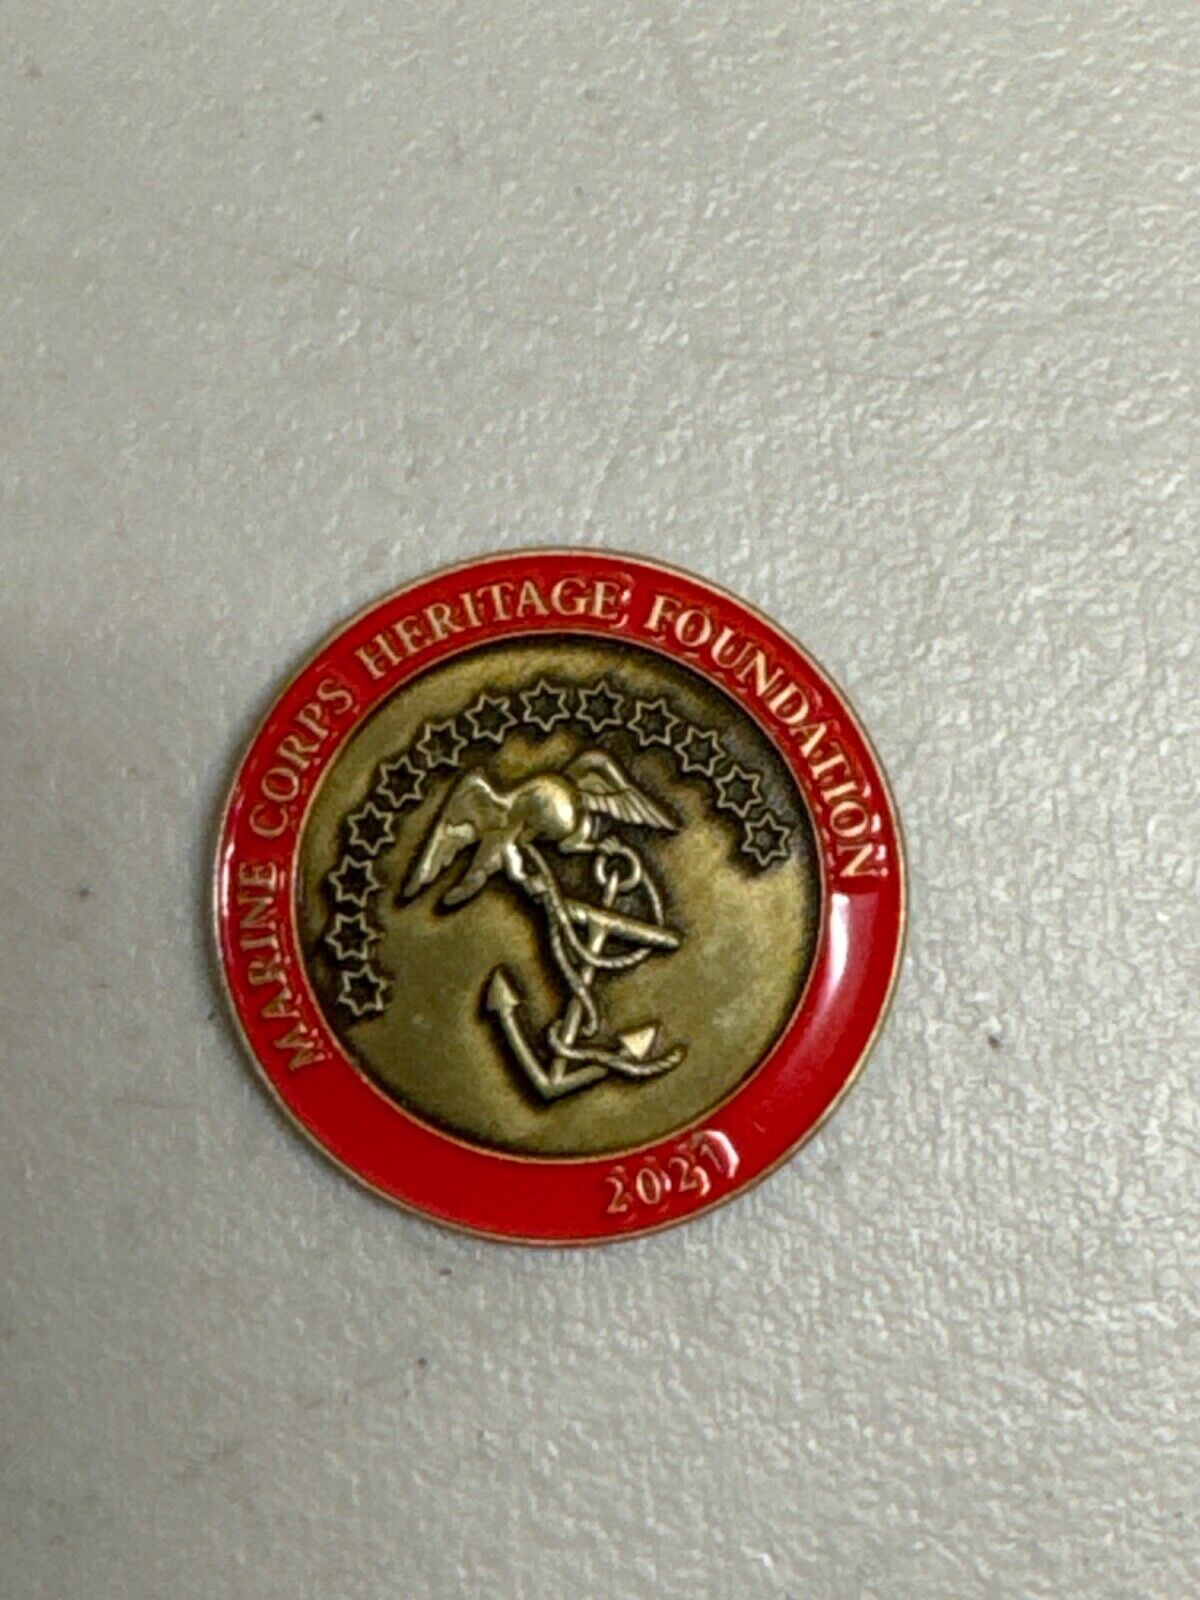 USMC Marine Corps Heritage Foundation 2021 OOH RAH Challenge Coin